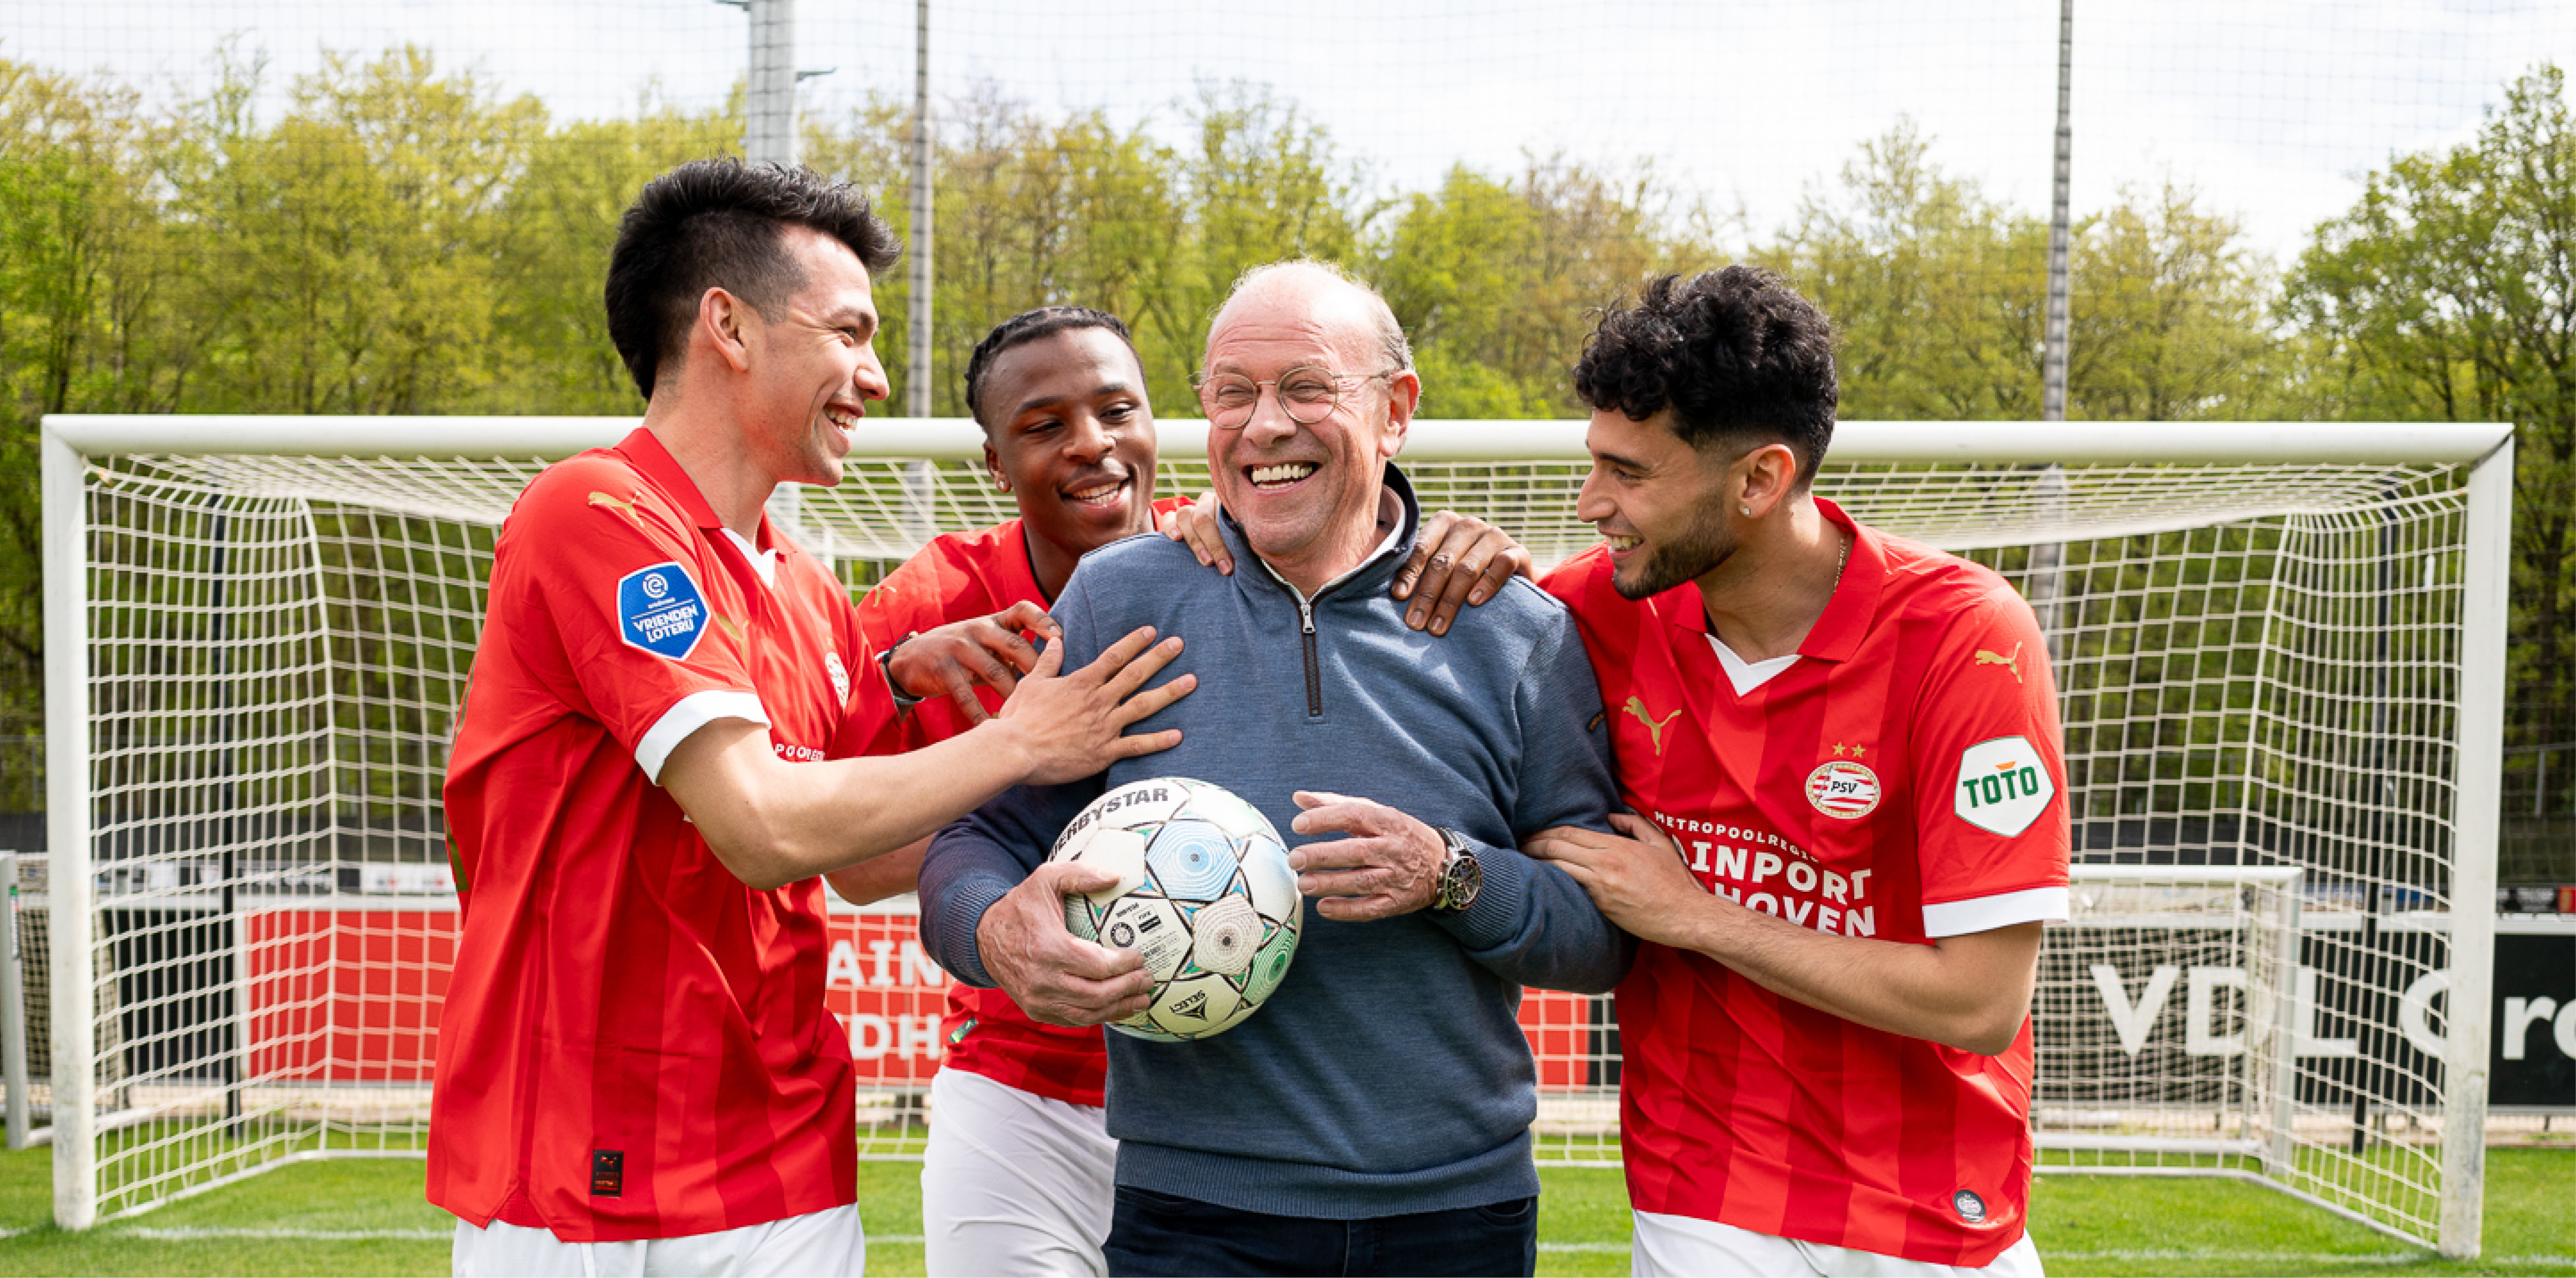 KaFra Housing and PSV provide international talent a second home